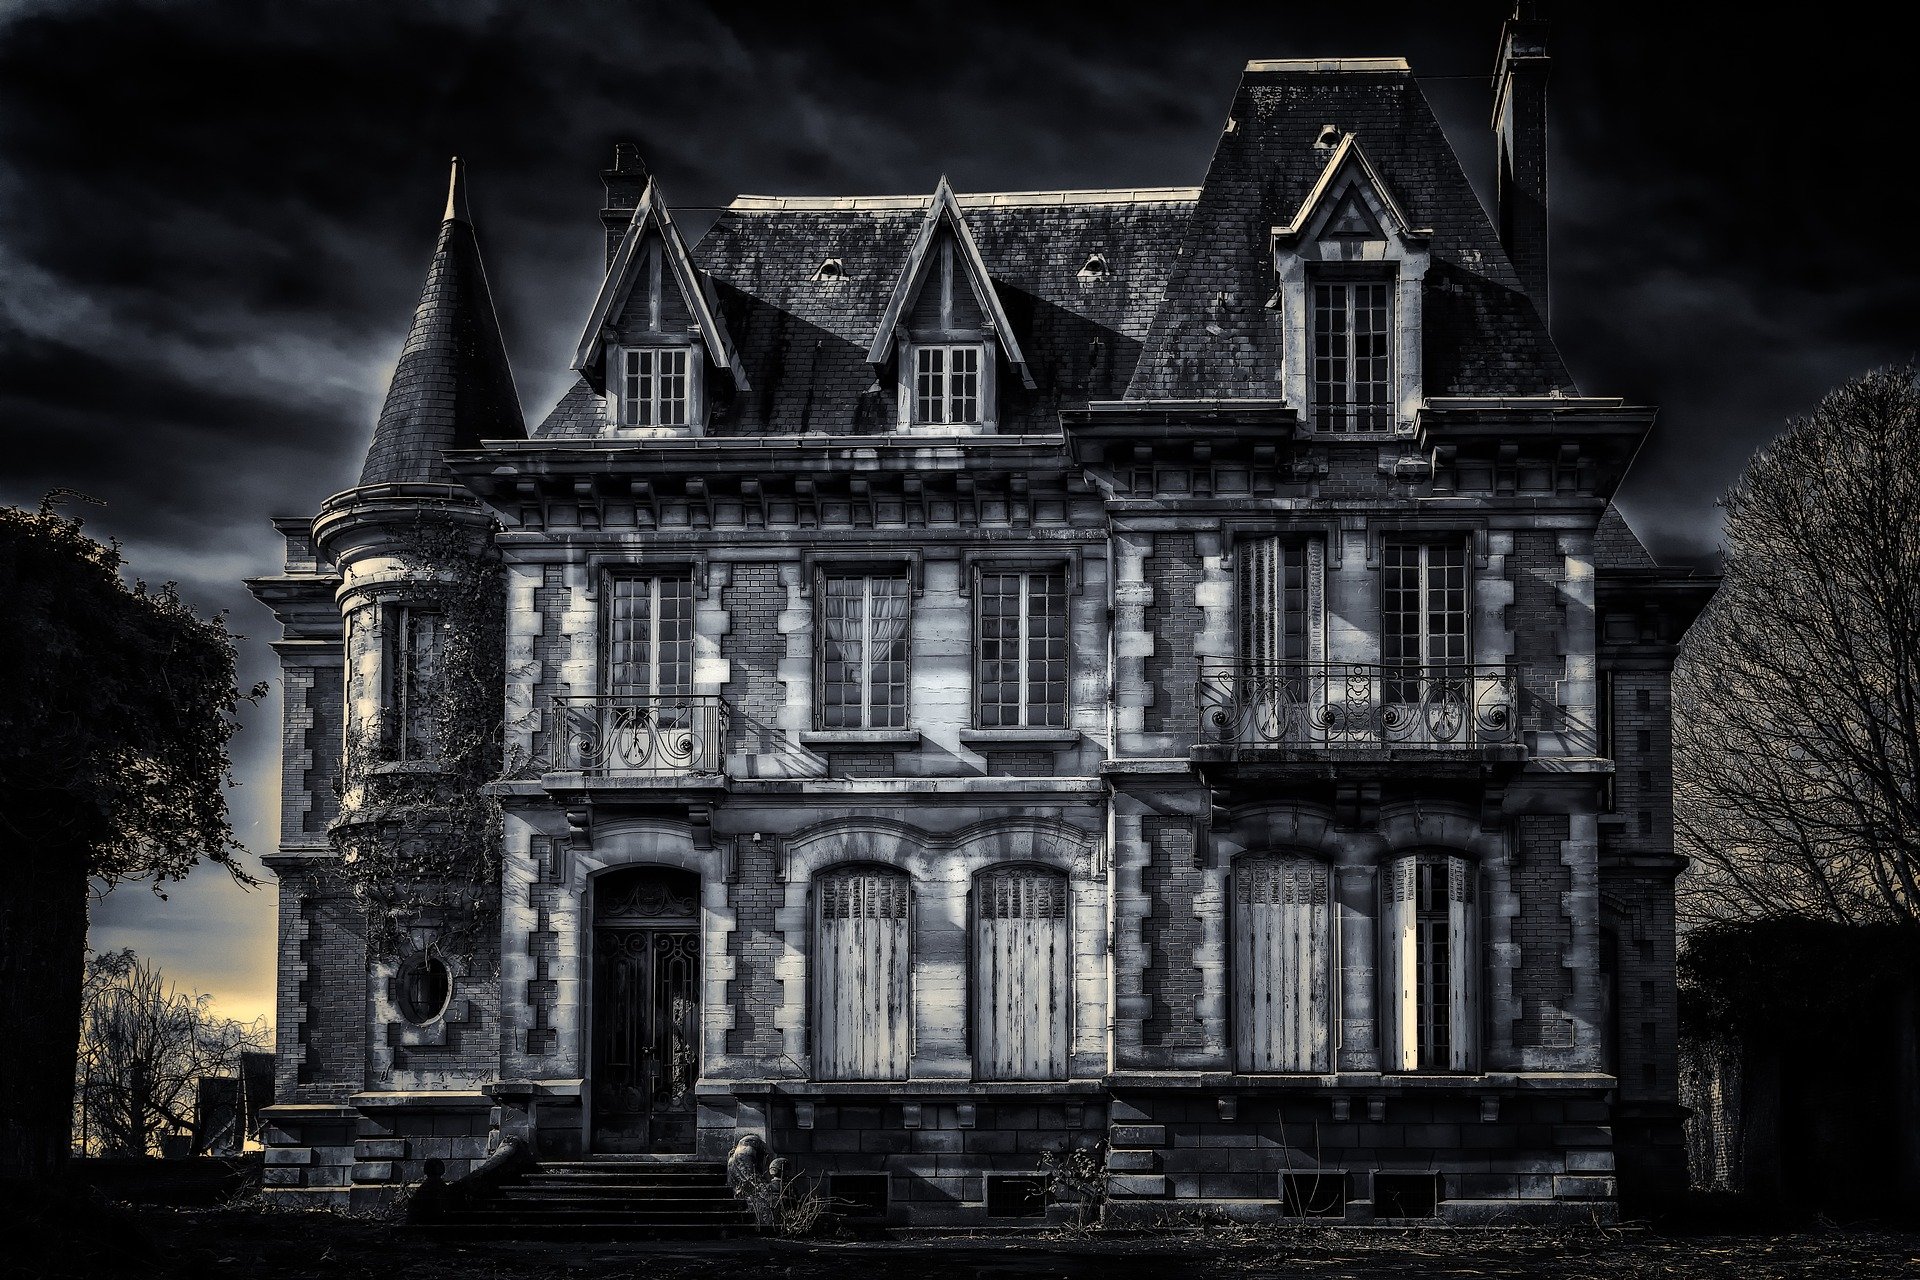 dark manor haunted house in norwich ct